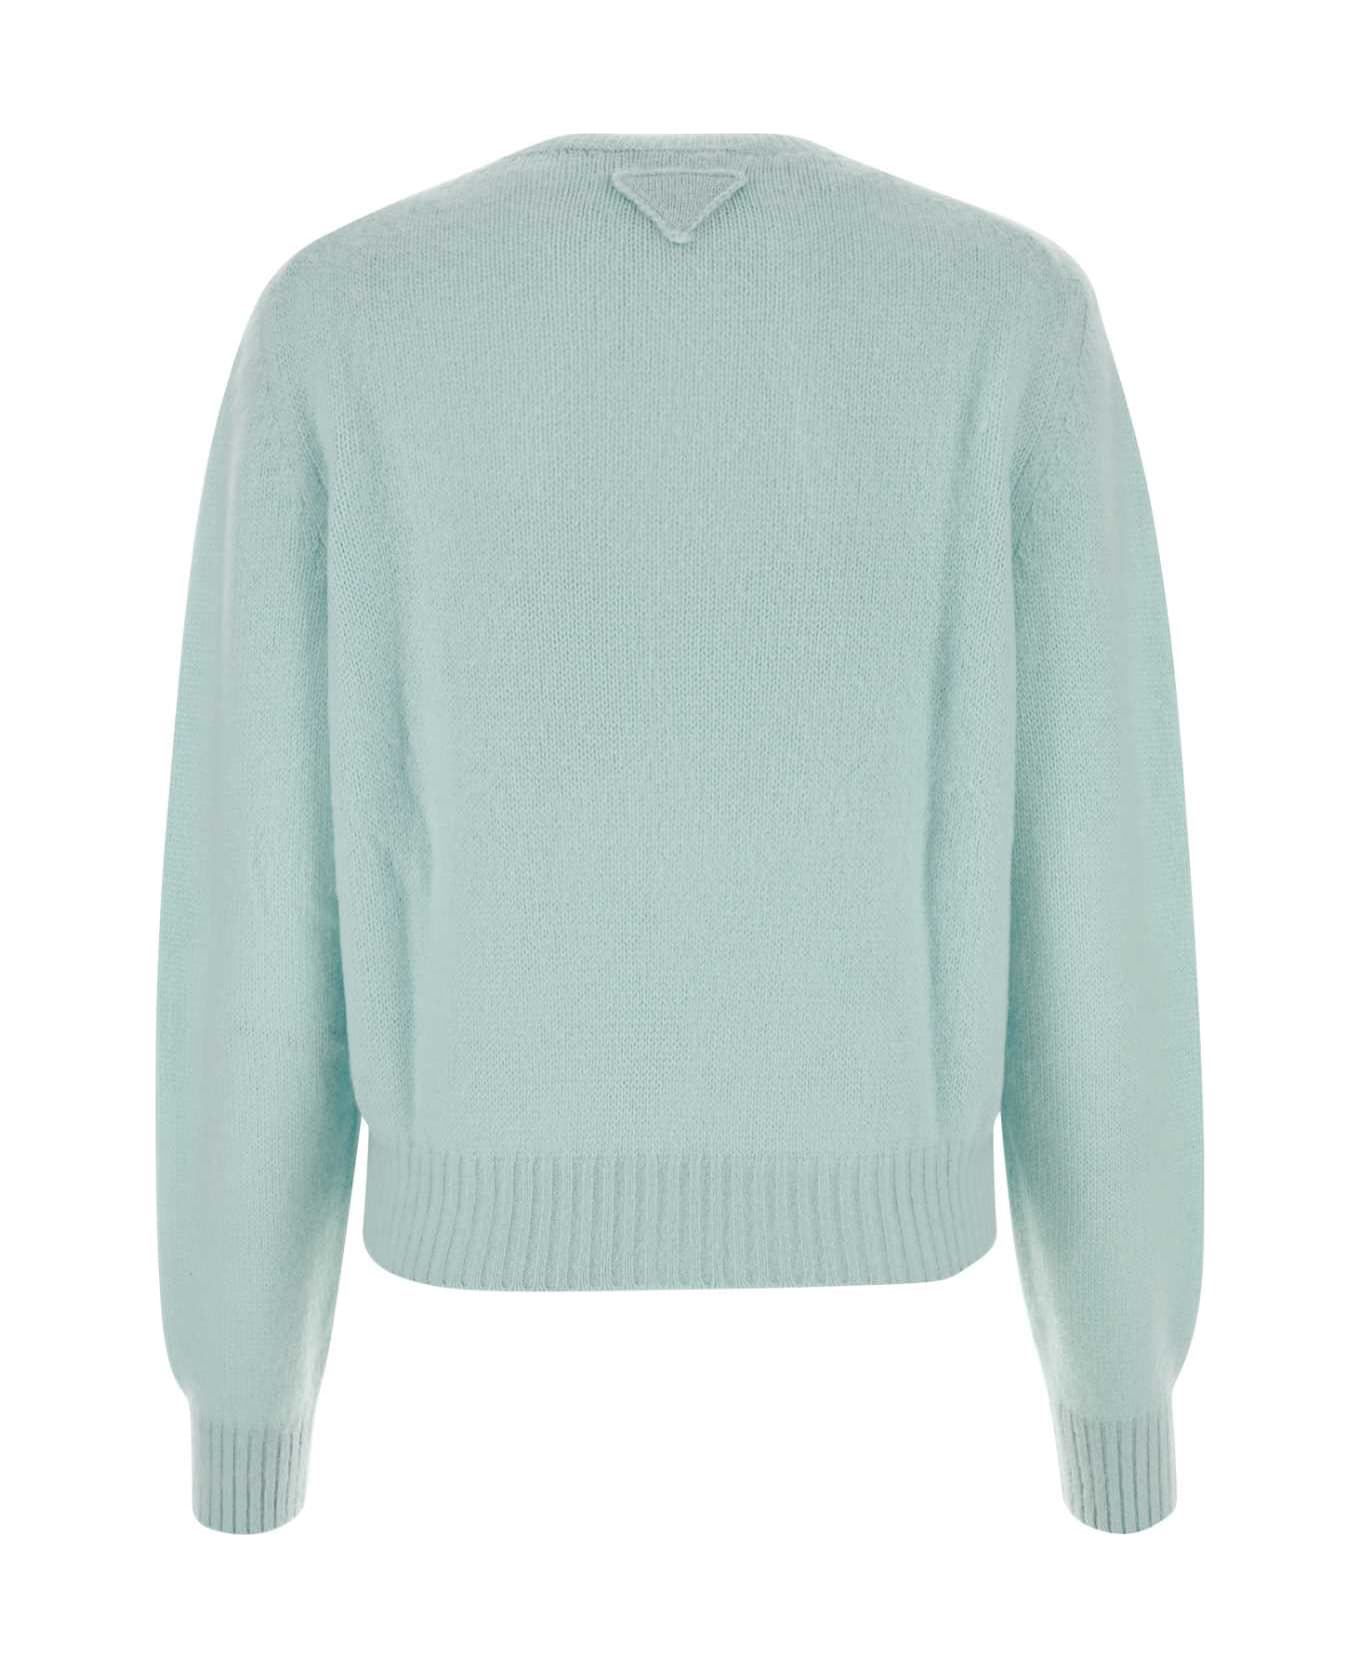 Prada Tiffany Cashmere Sweater - CLOROFILLA